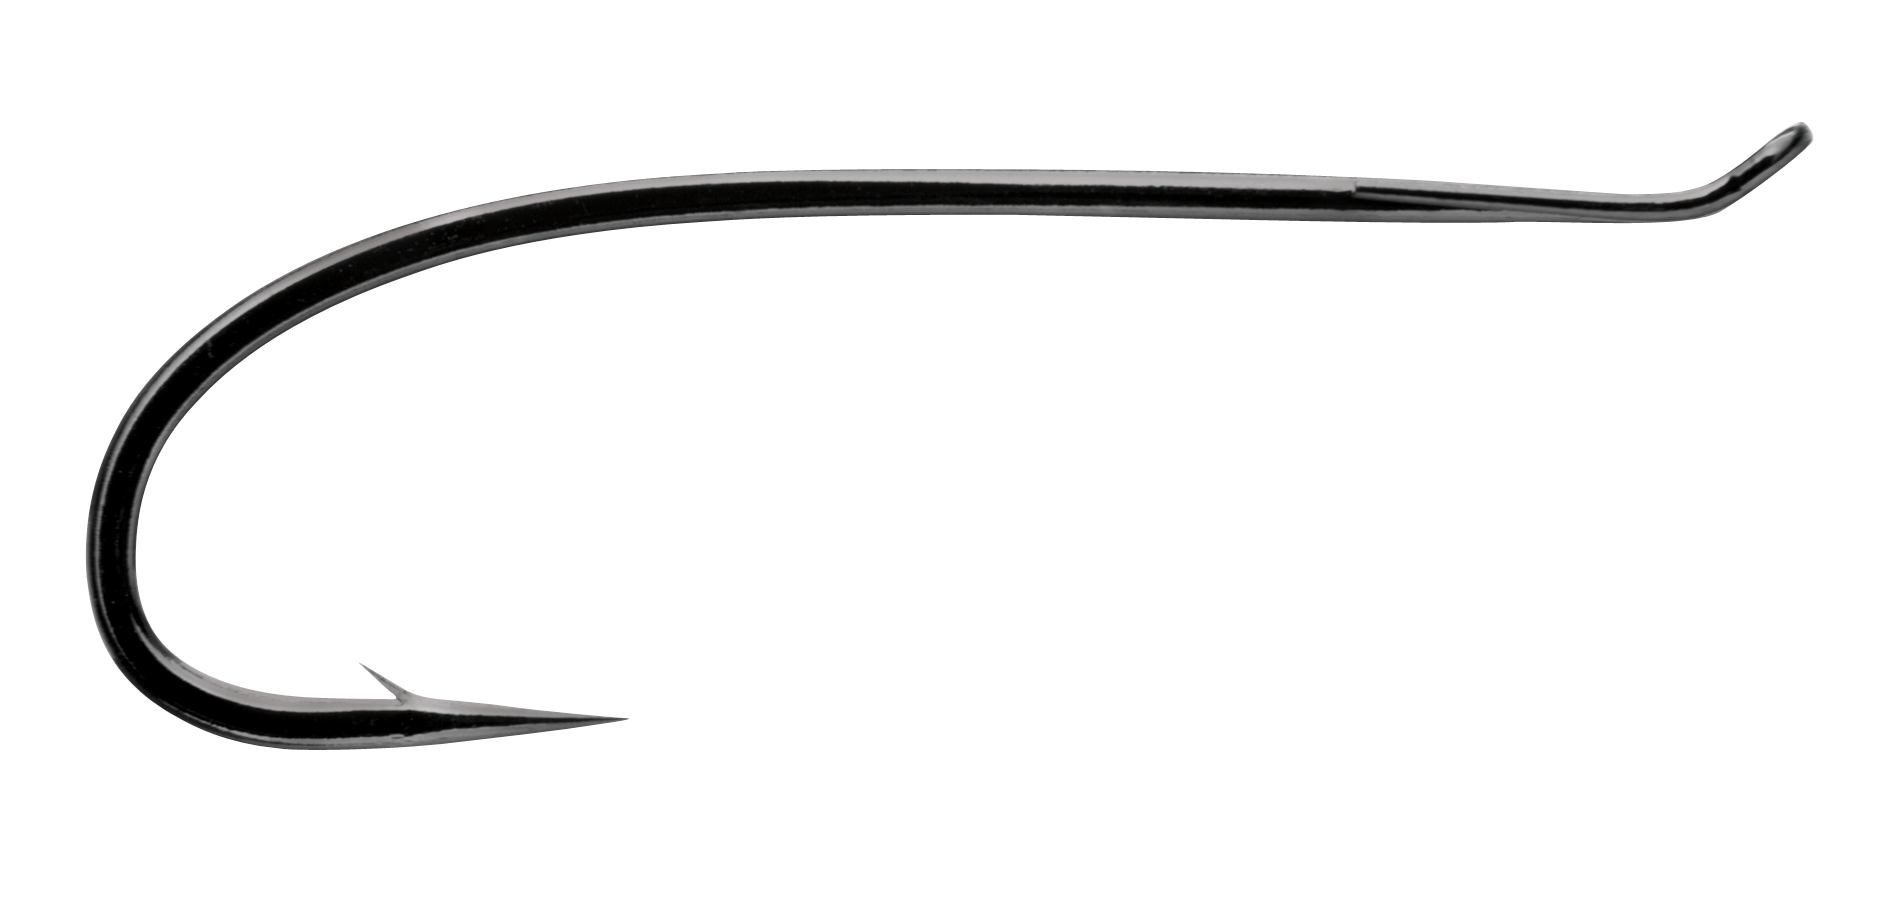 Gamakatsu Salmon/Steelhead Wet Fly Hook  T10-6H - #2 - Nickel Silver Black